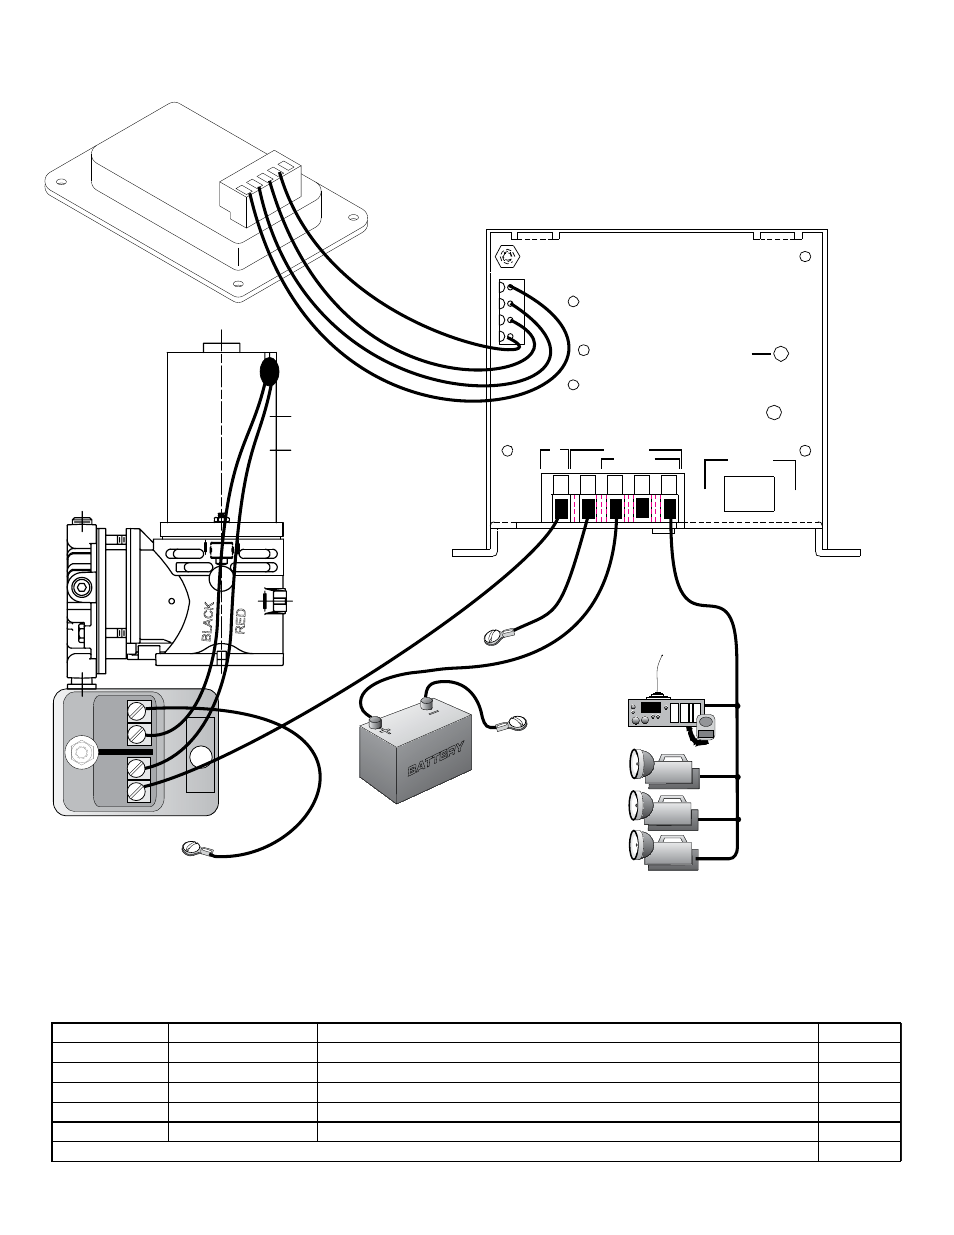 Pump plus, Installation wiring diagram, Wire size chart | Kussmaul